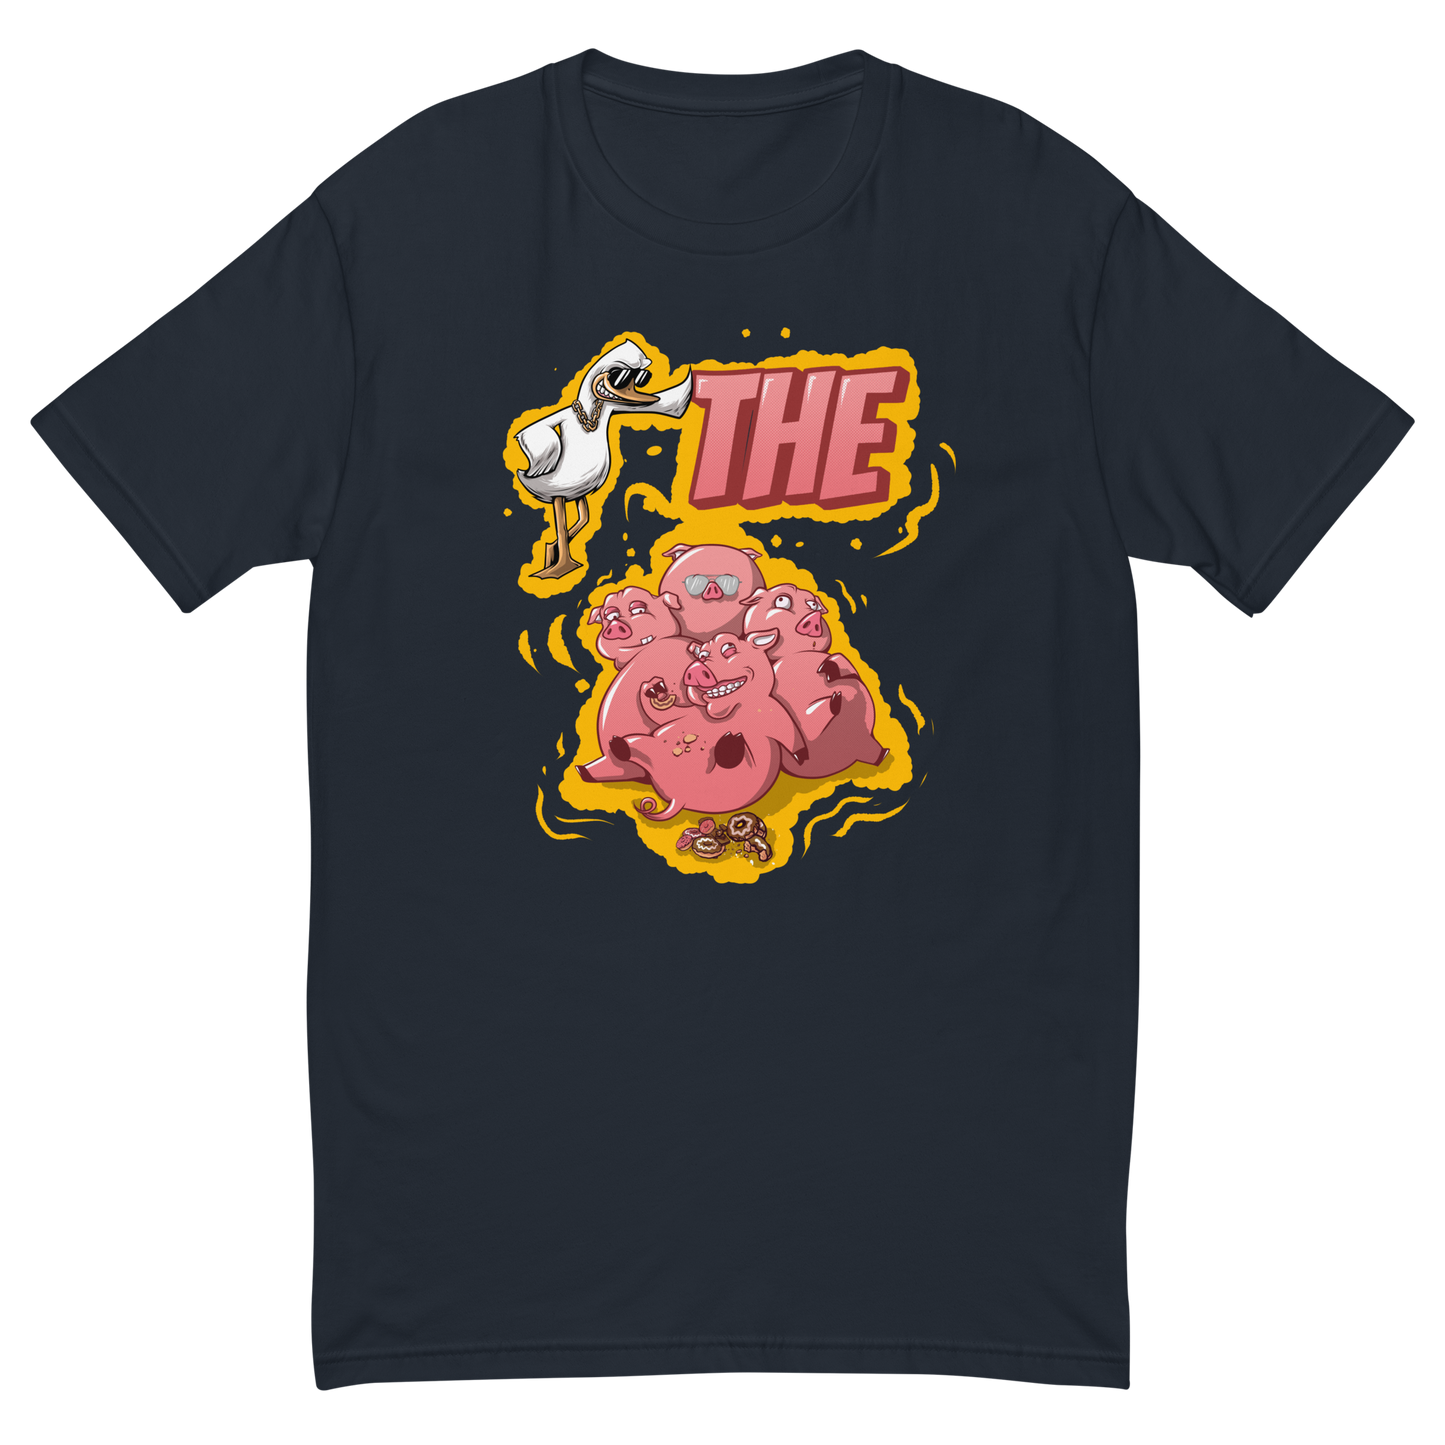 A-Hole "Duck The Pigs" Short Sleeve T-shirt